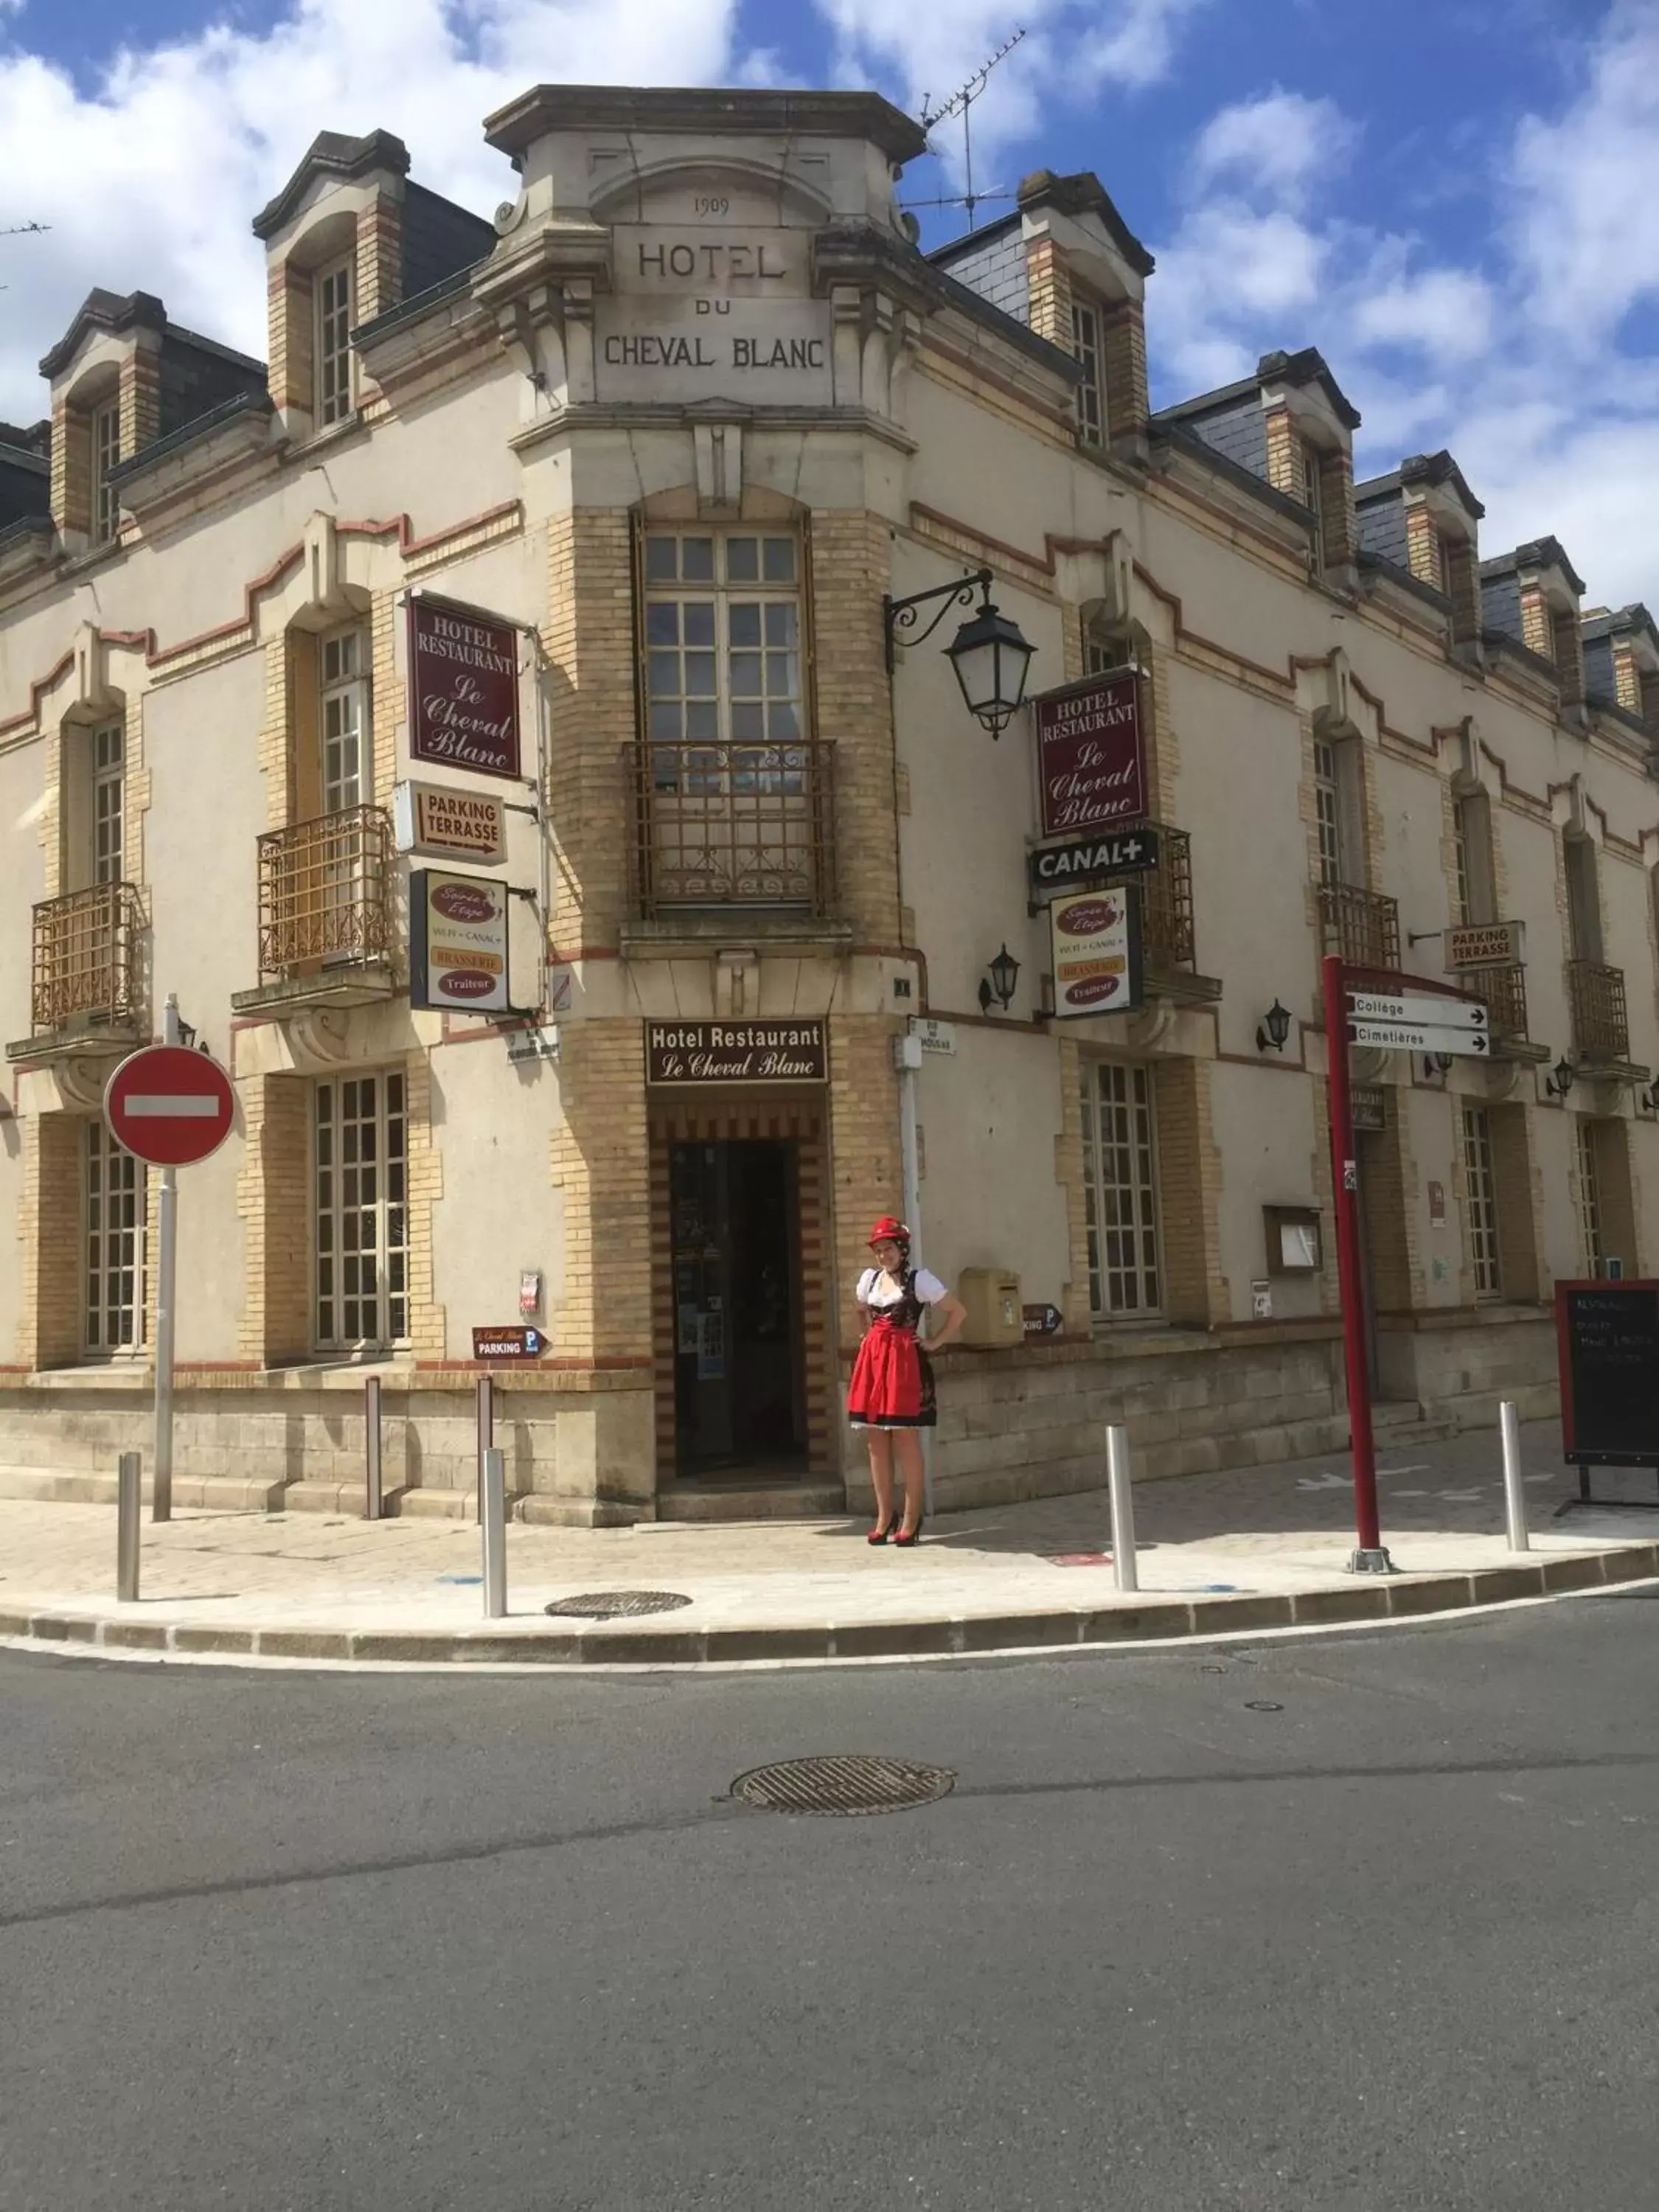 Property building, Facade/Entrance in Le Cheval Blanc